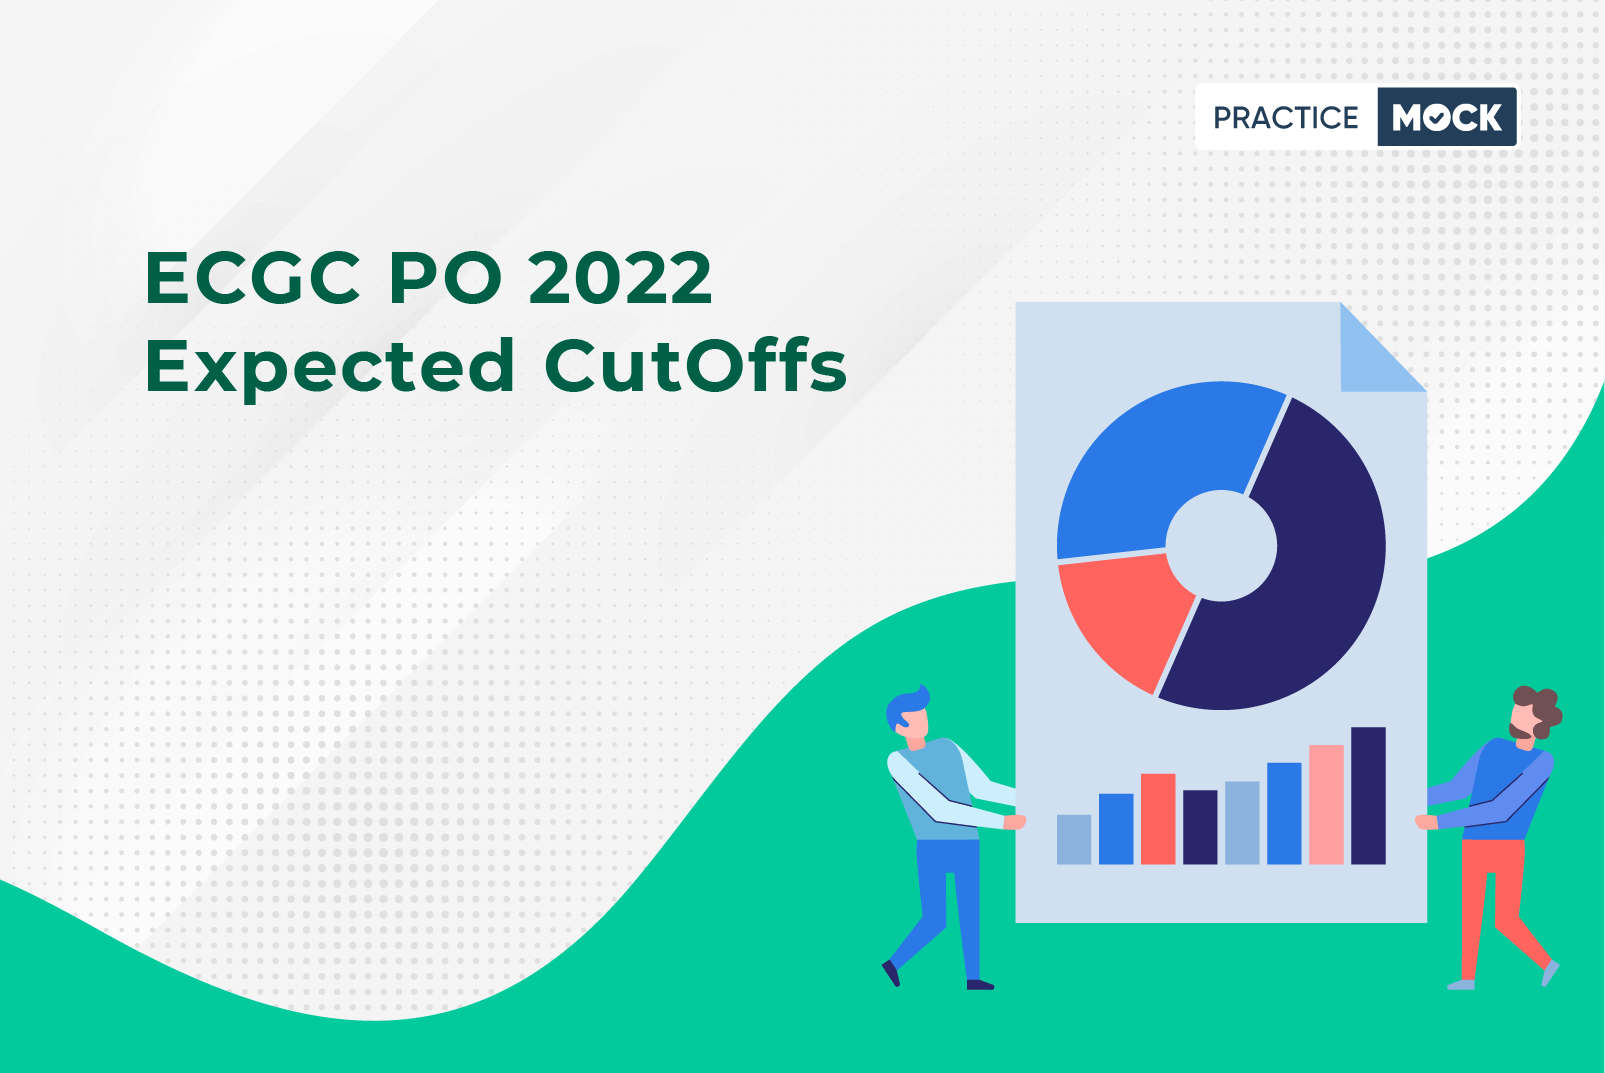 ECGC PO 2022 Expected Cutoffs